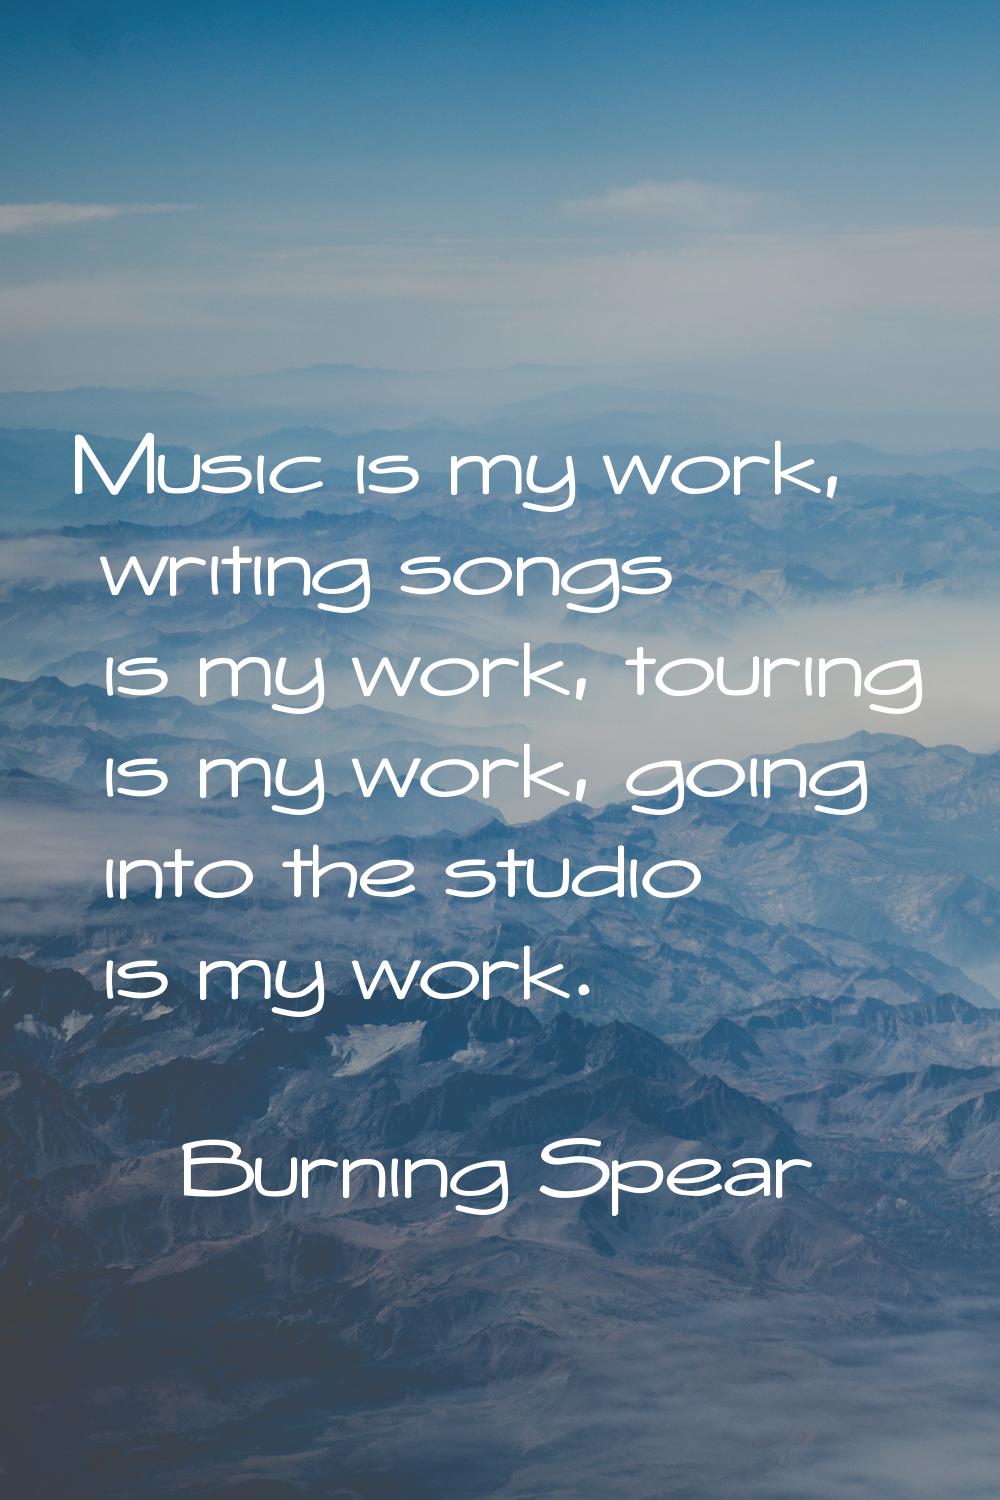 Music is my work, writing songs is my work, touring is my work, going into the studio is my work.